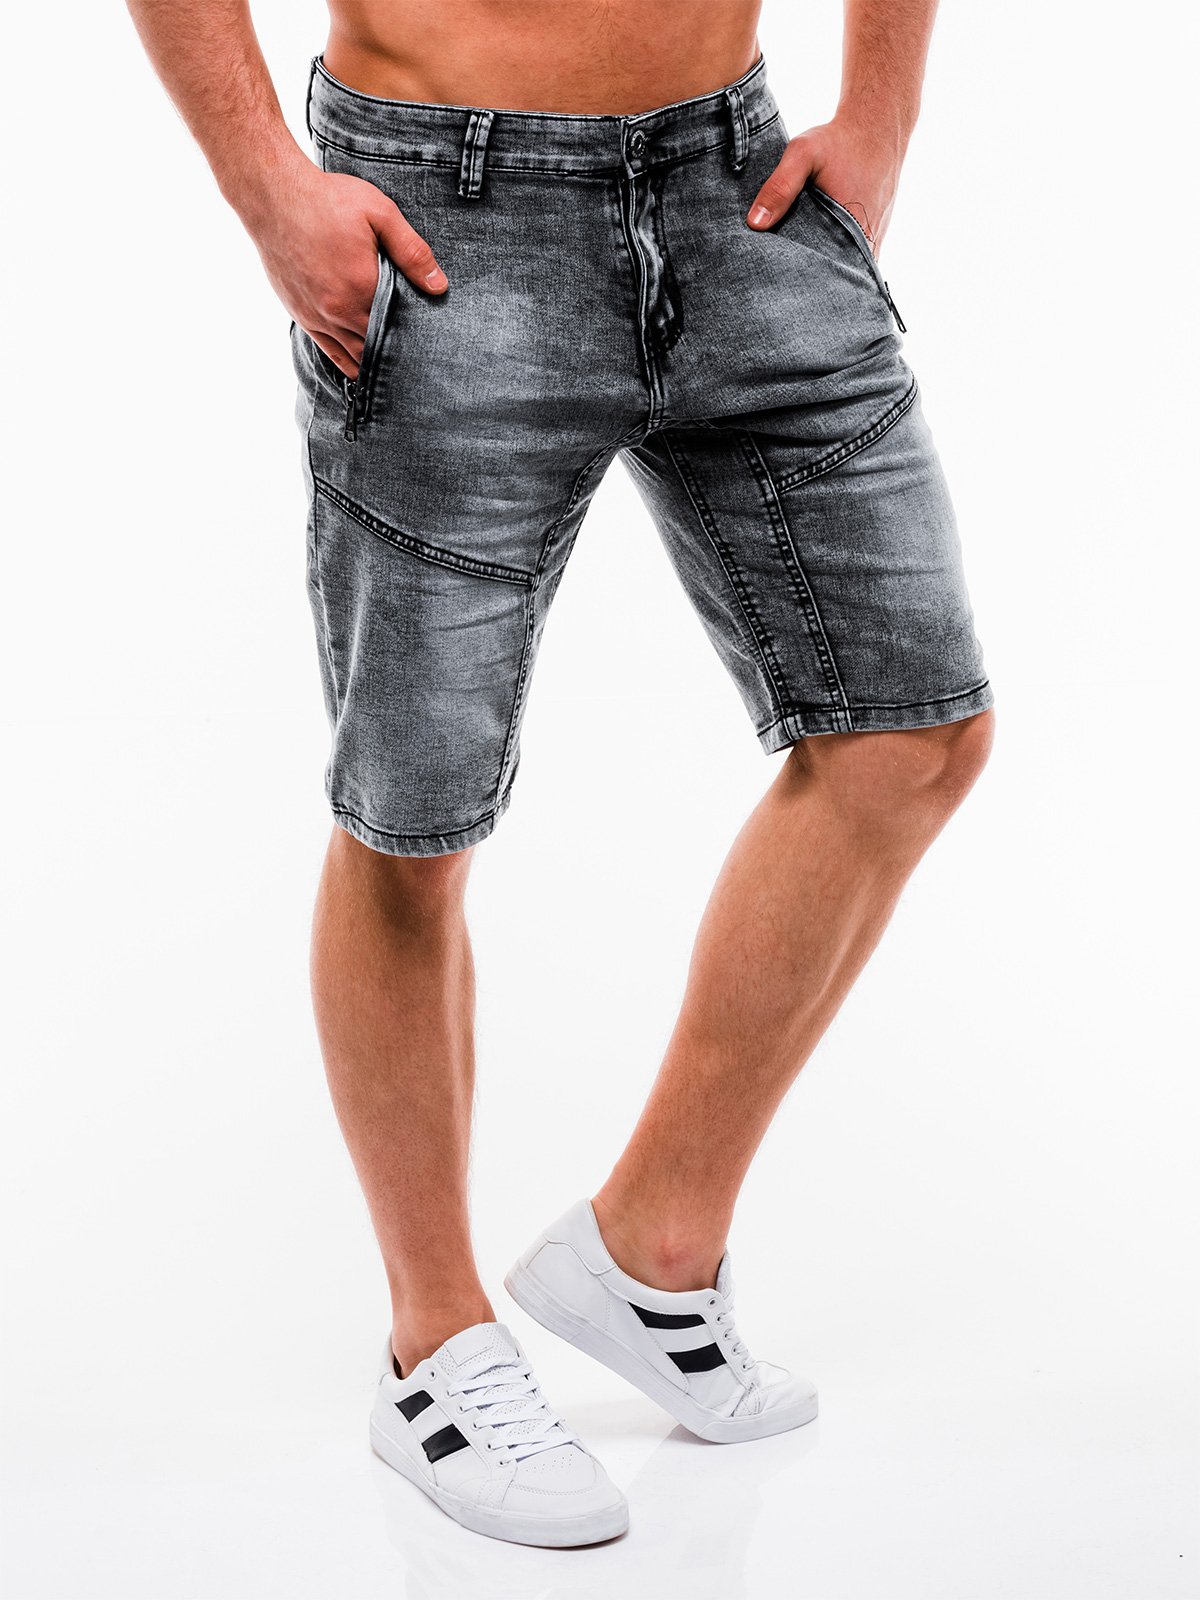 Men's denim shorts W129 - black | MODONE wholesale - Clothing For Men